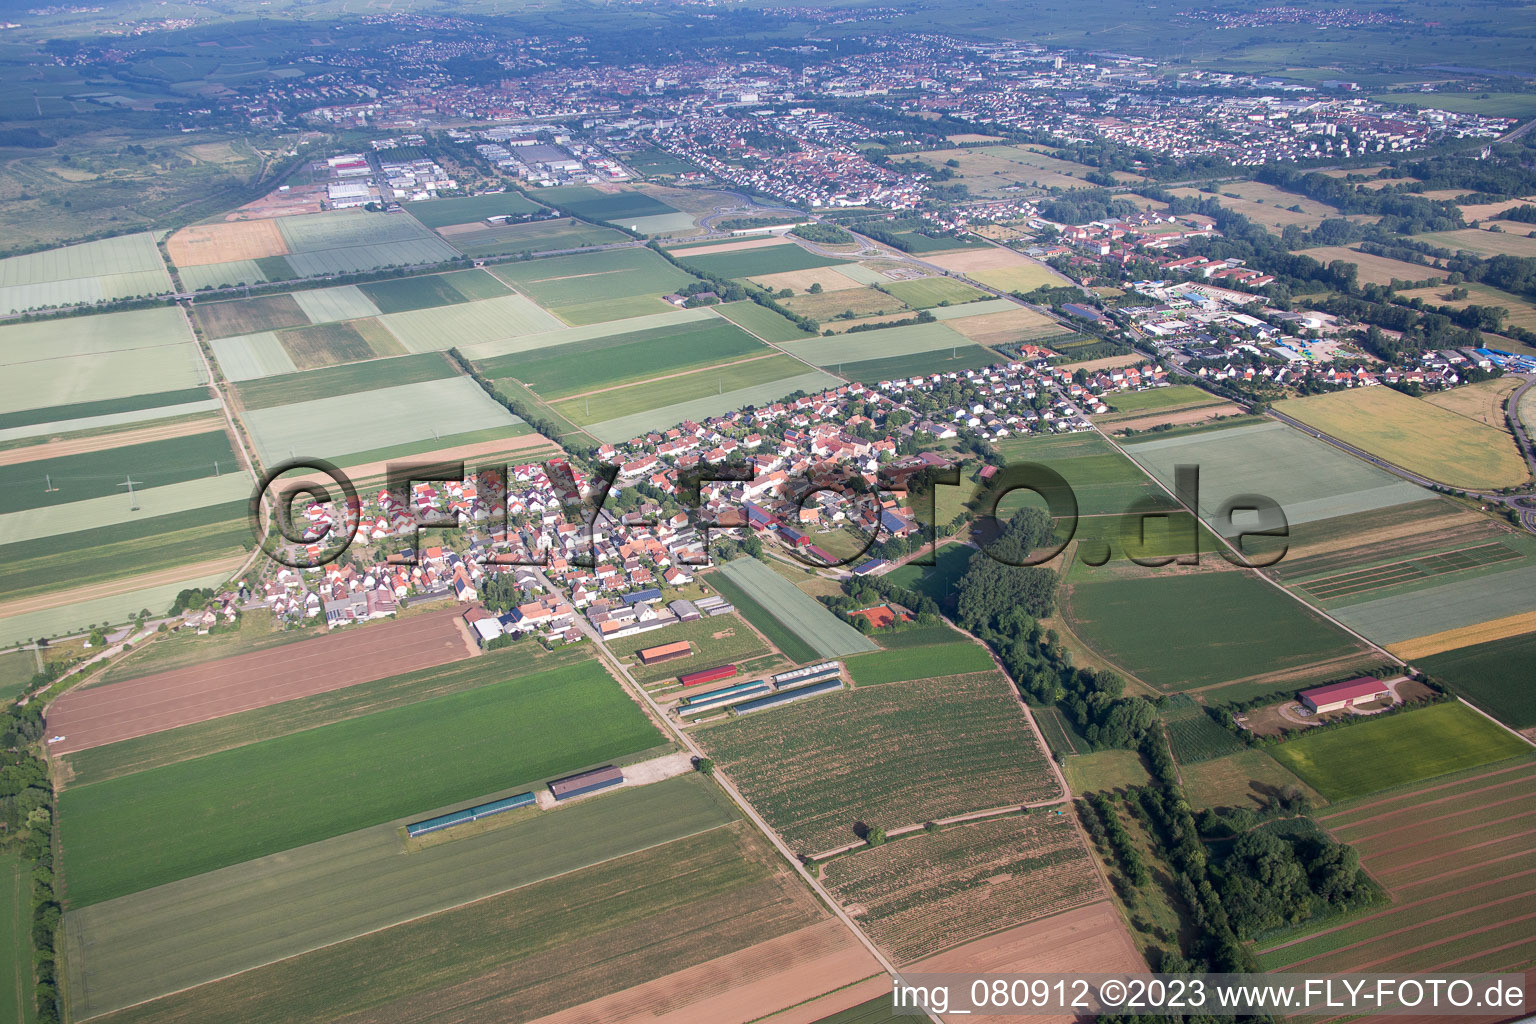 Aerial view of District Mörlheim in Landau in der Pfalz in the state Rhineland-Palatinate, Germany